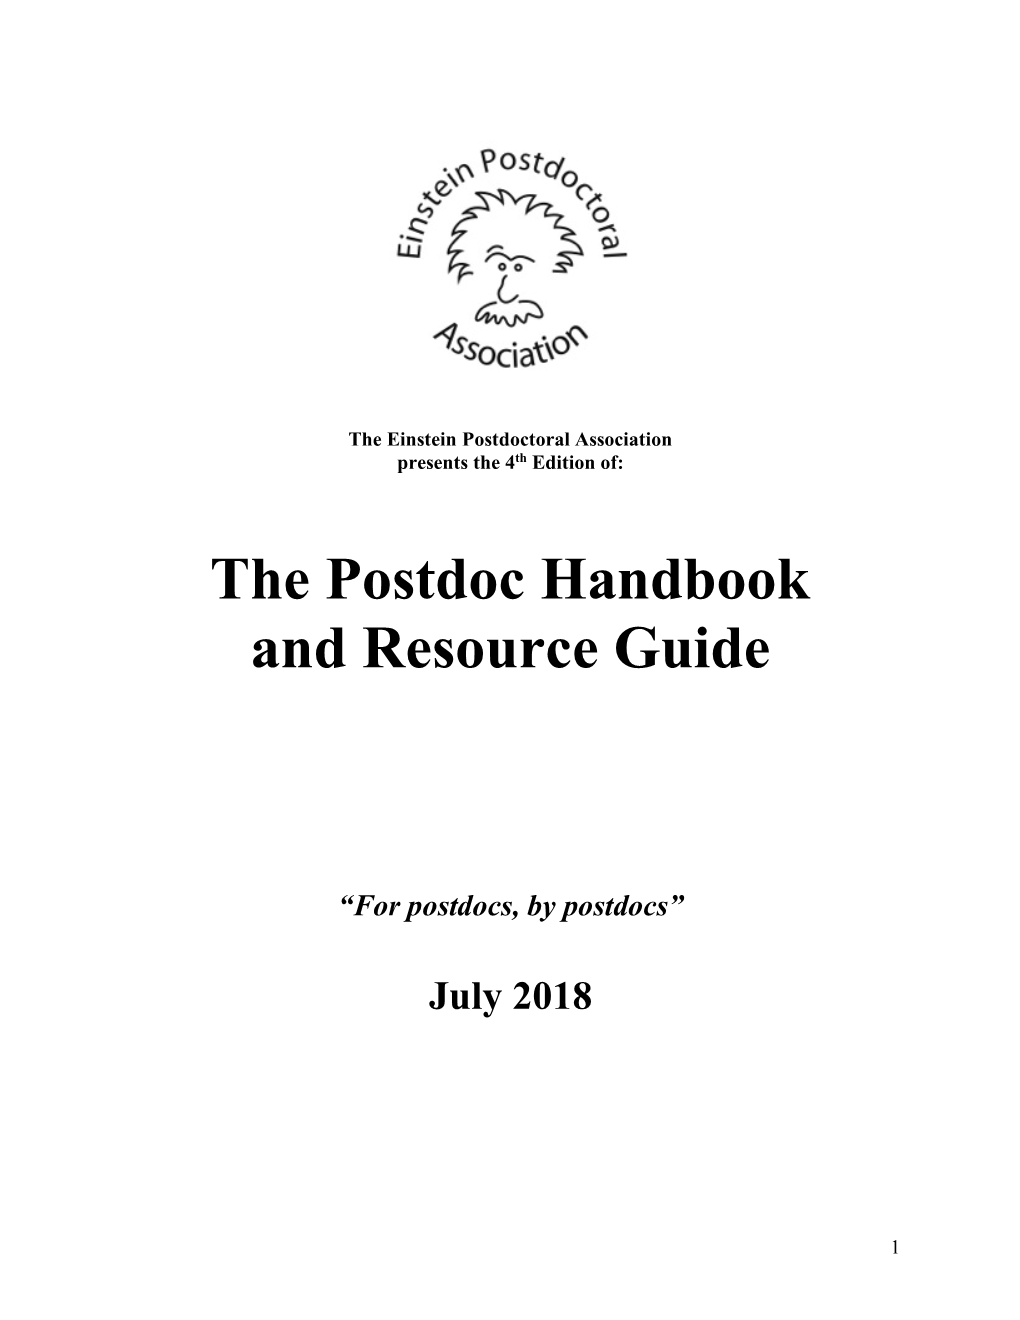 The Postdoc Handbook and Resource Guide